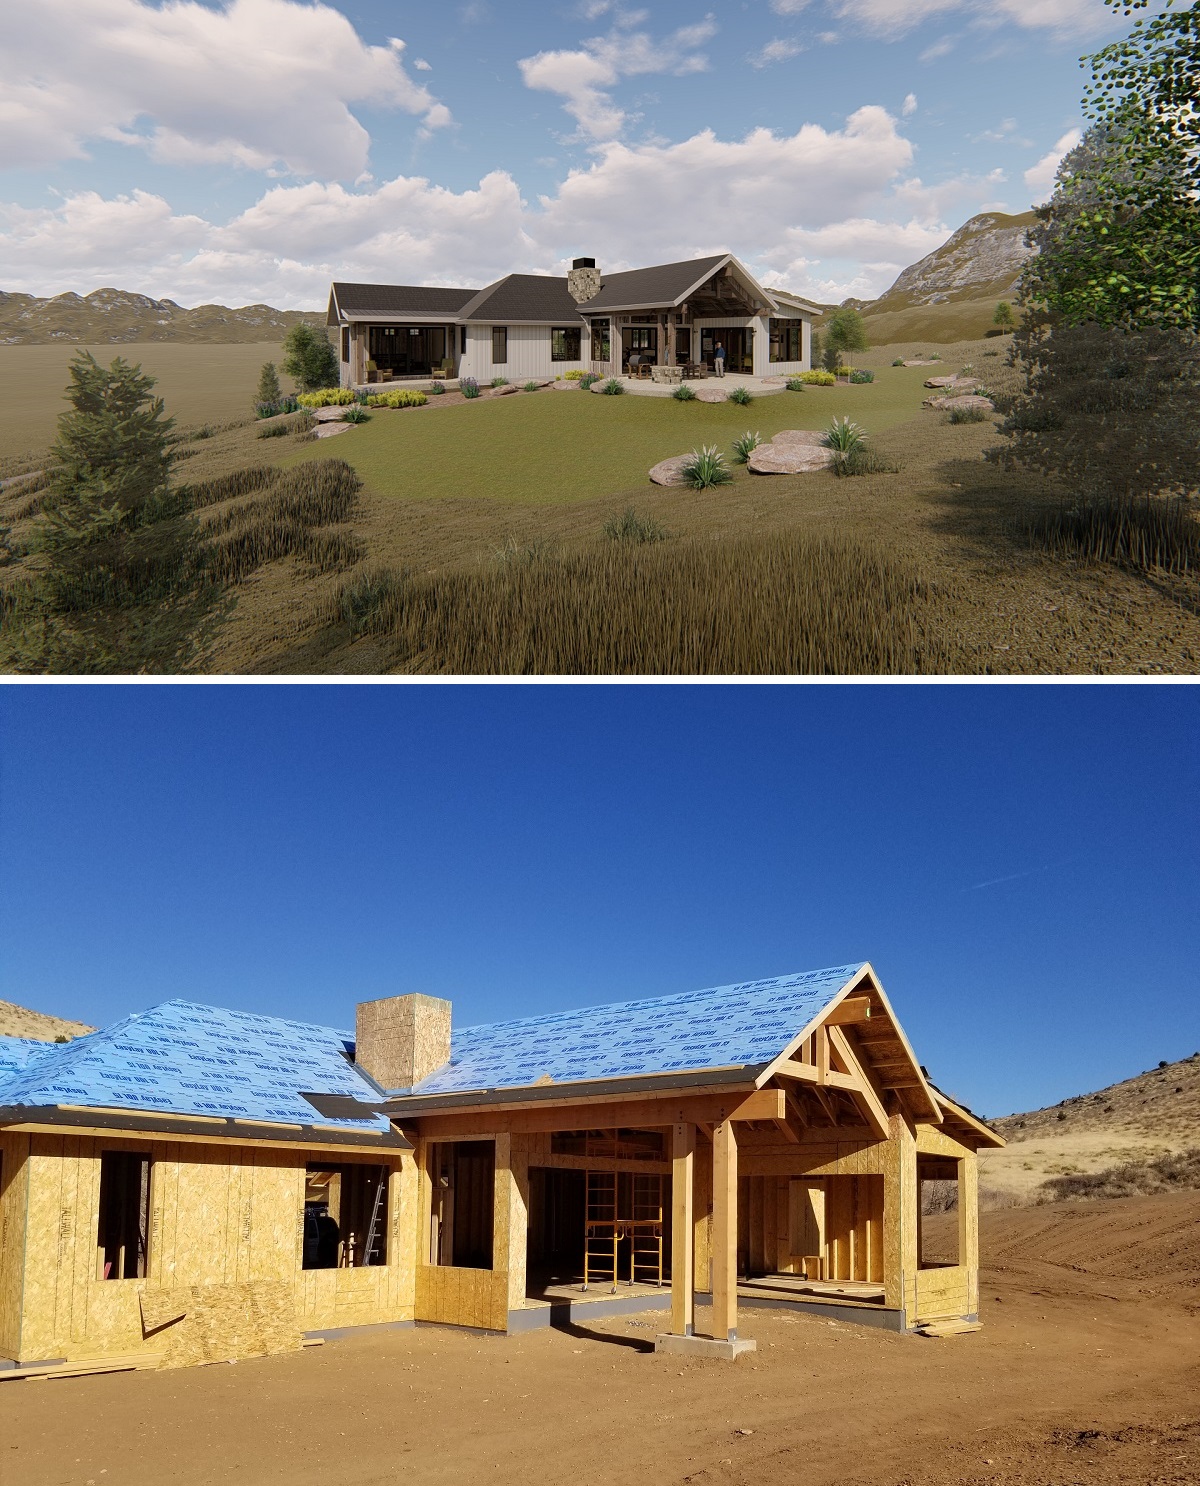 dutch_ridge_ranch_construction_rear_patios_rendering_highcraft_builders_october_2019